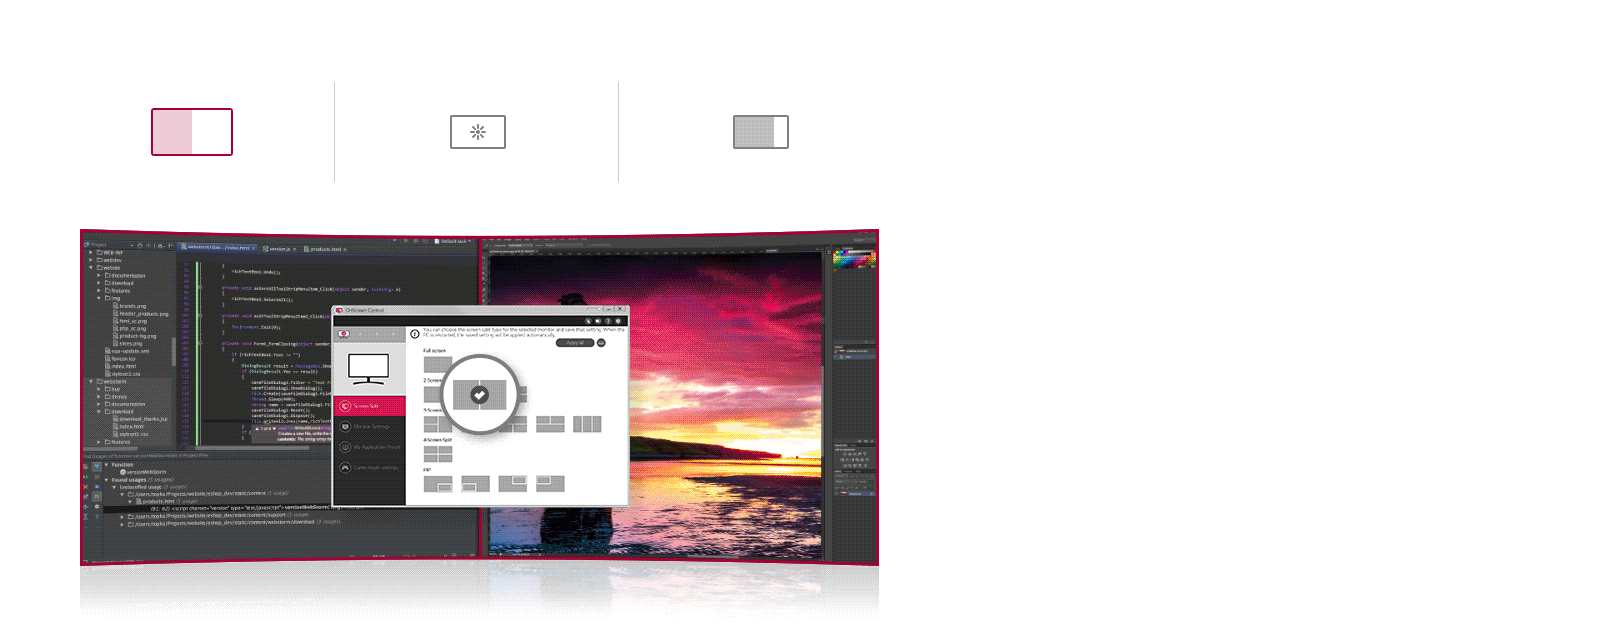 D06_mnt-ultrawide-34wq75c-05-1-onscreen-control-desktop